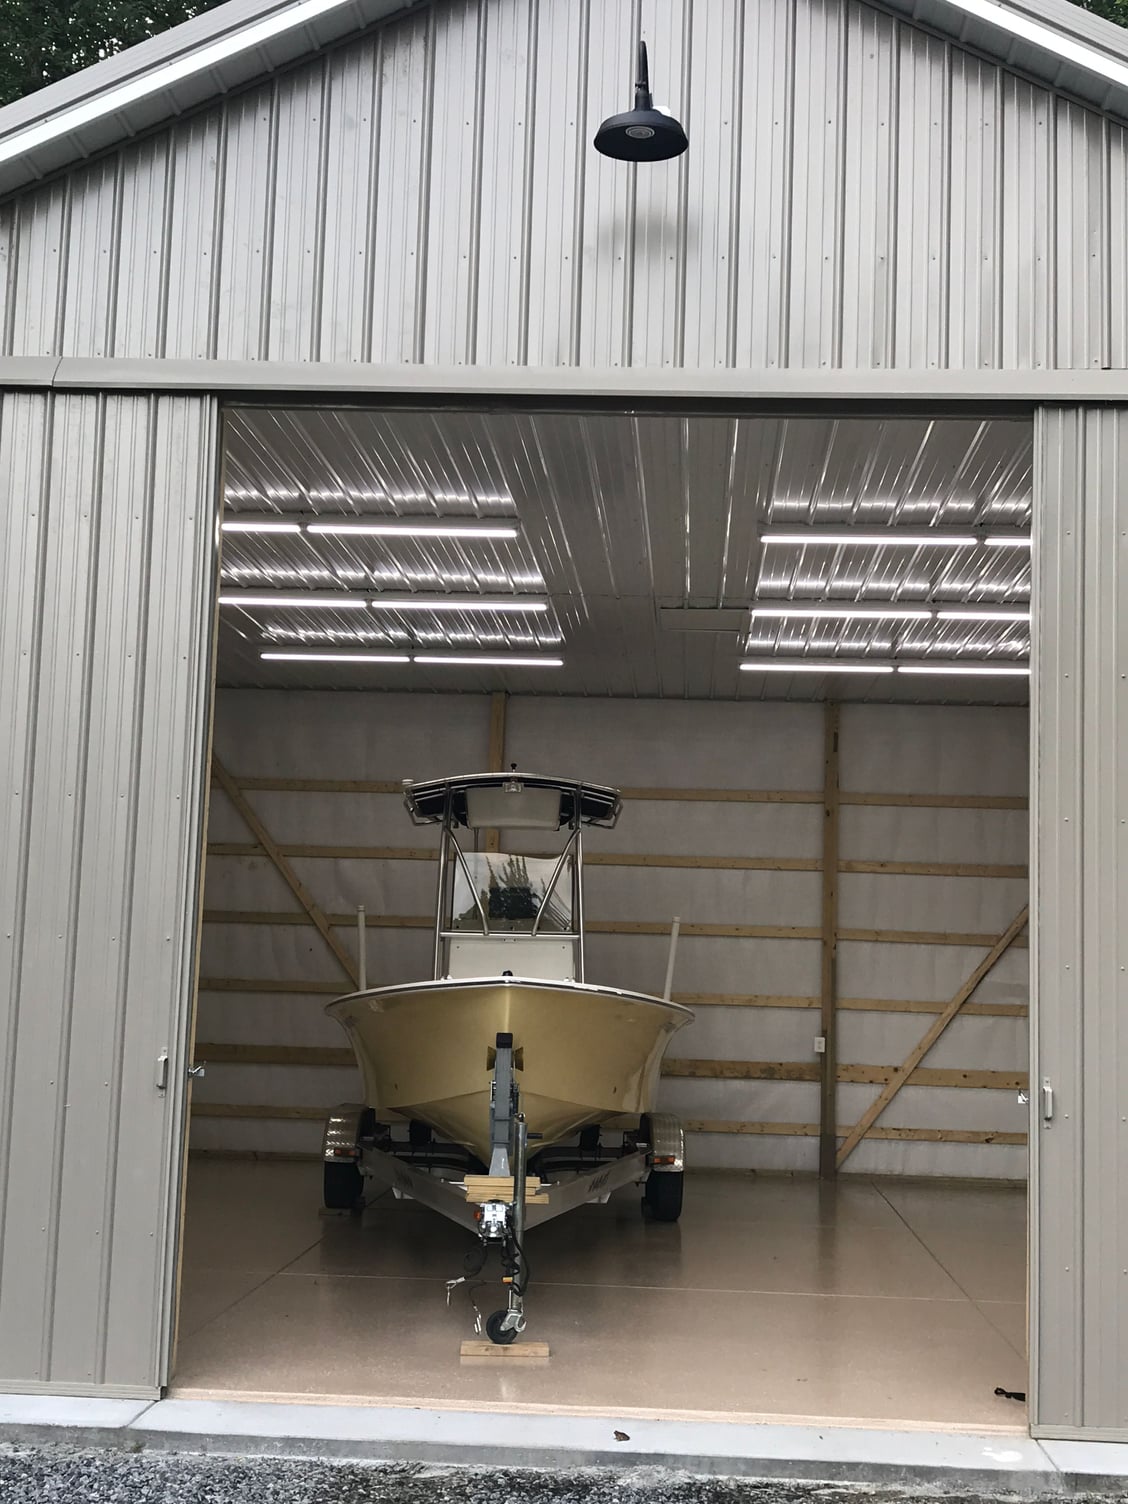 47 Electric Garage door height for boat storage Replacement